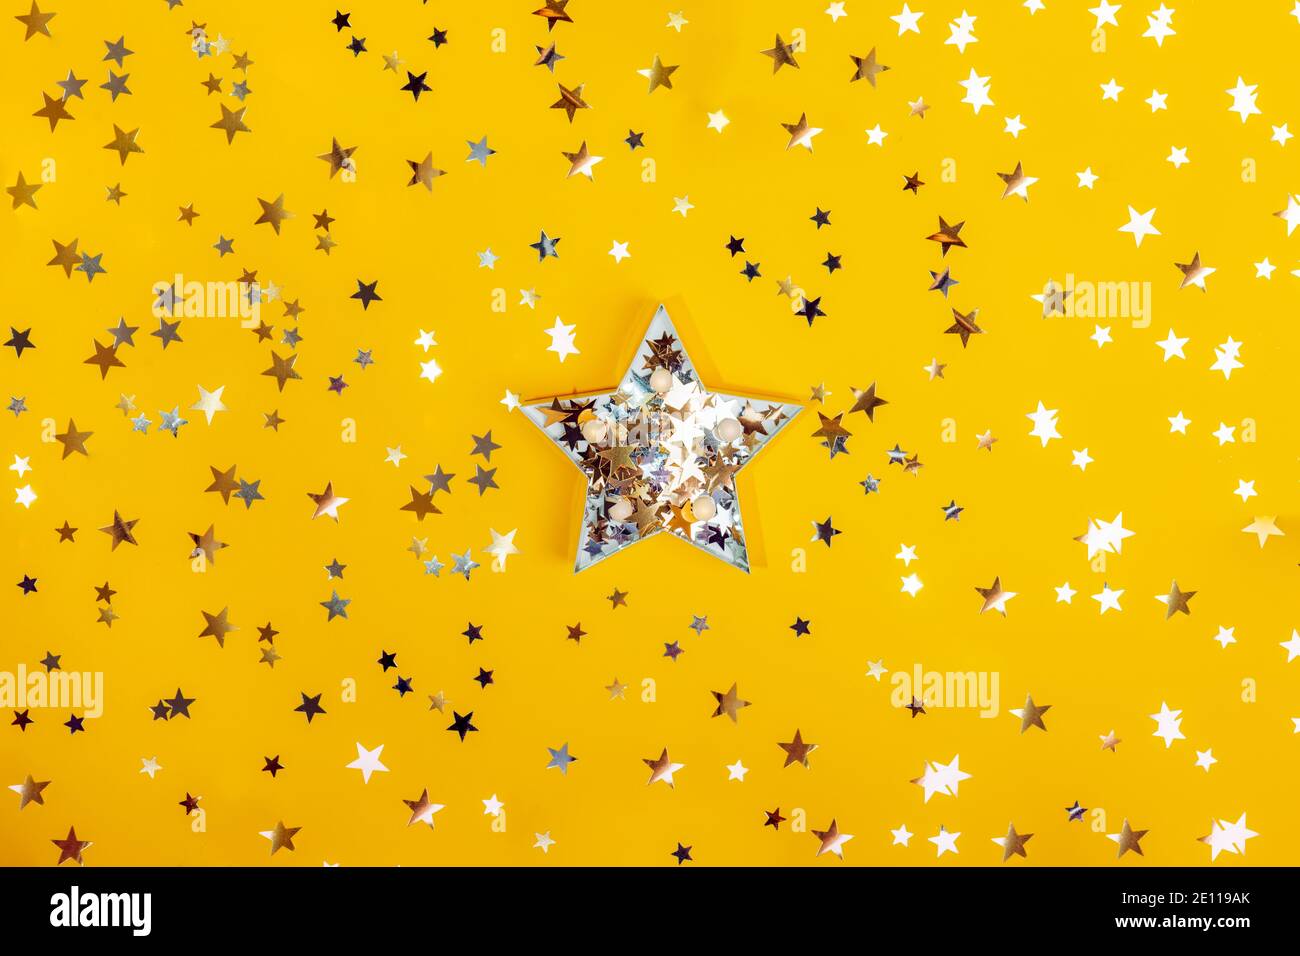 Yellow Orange Glitter Background with Stars Stock Image - Image of bokeh,  stars: 231279687